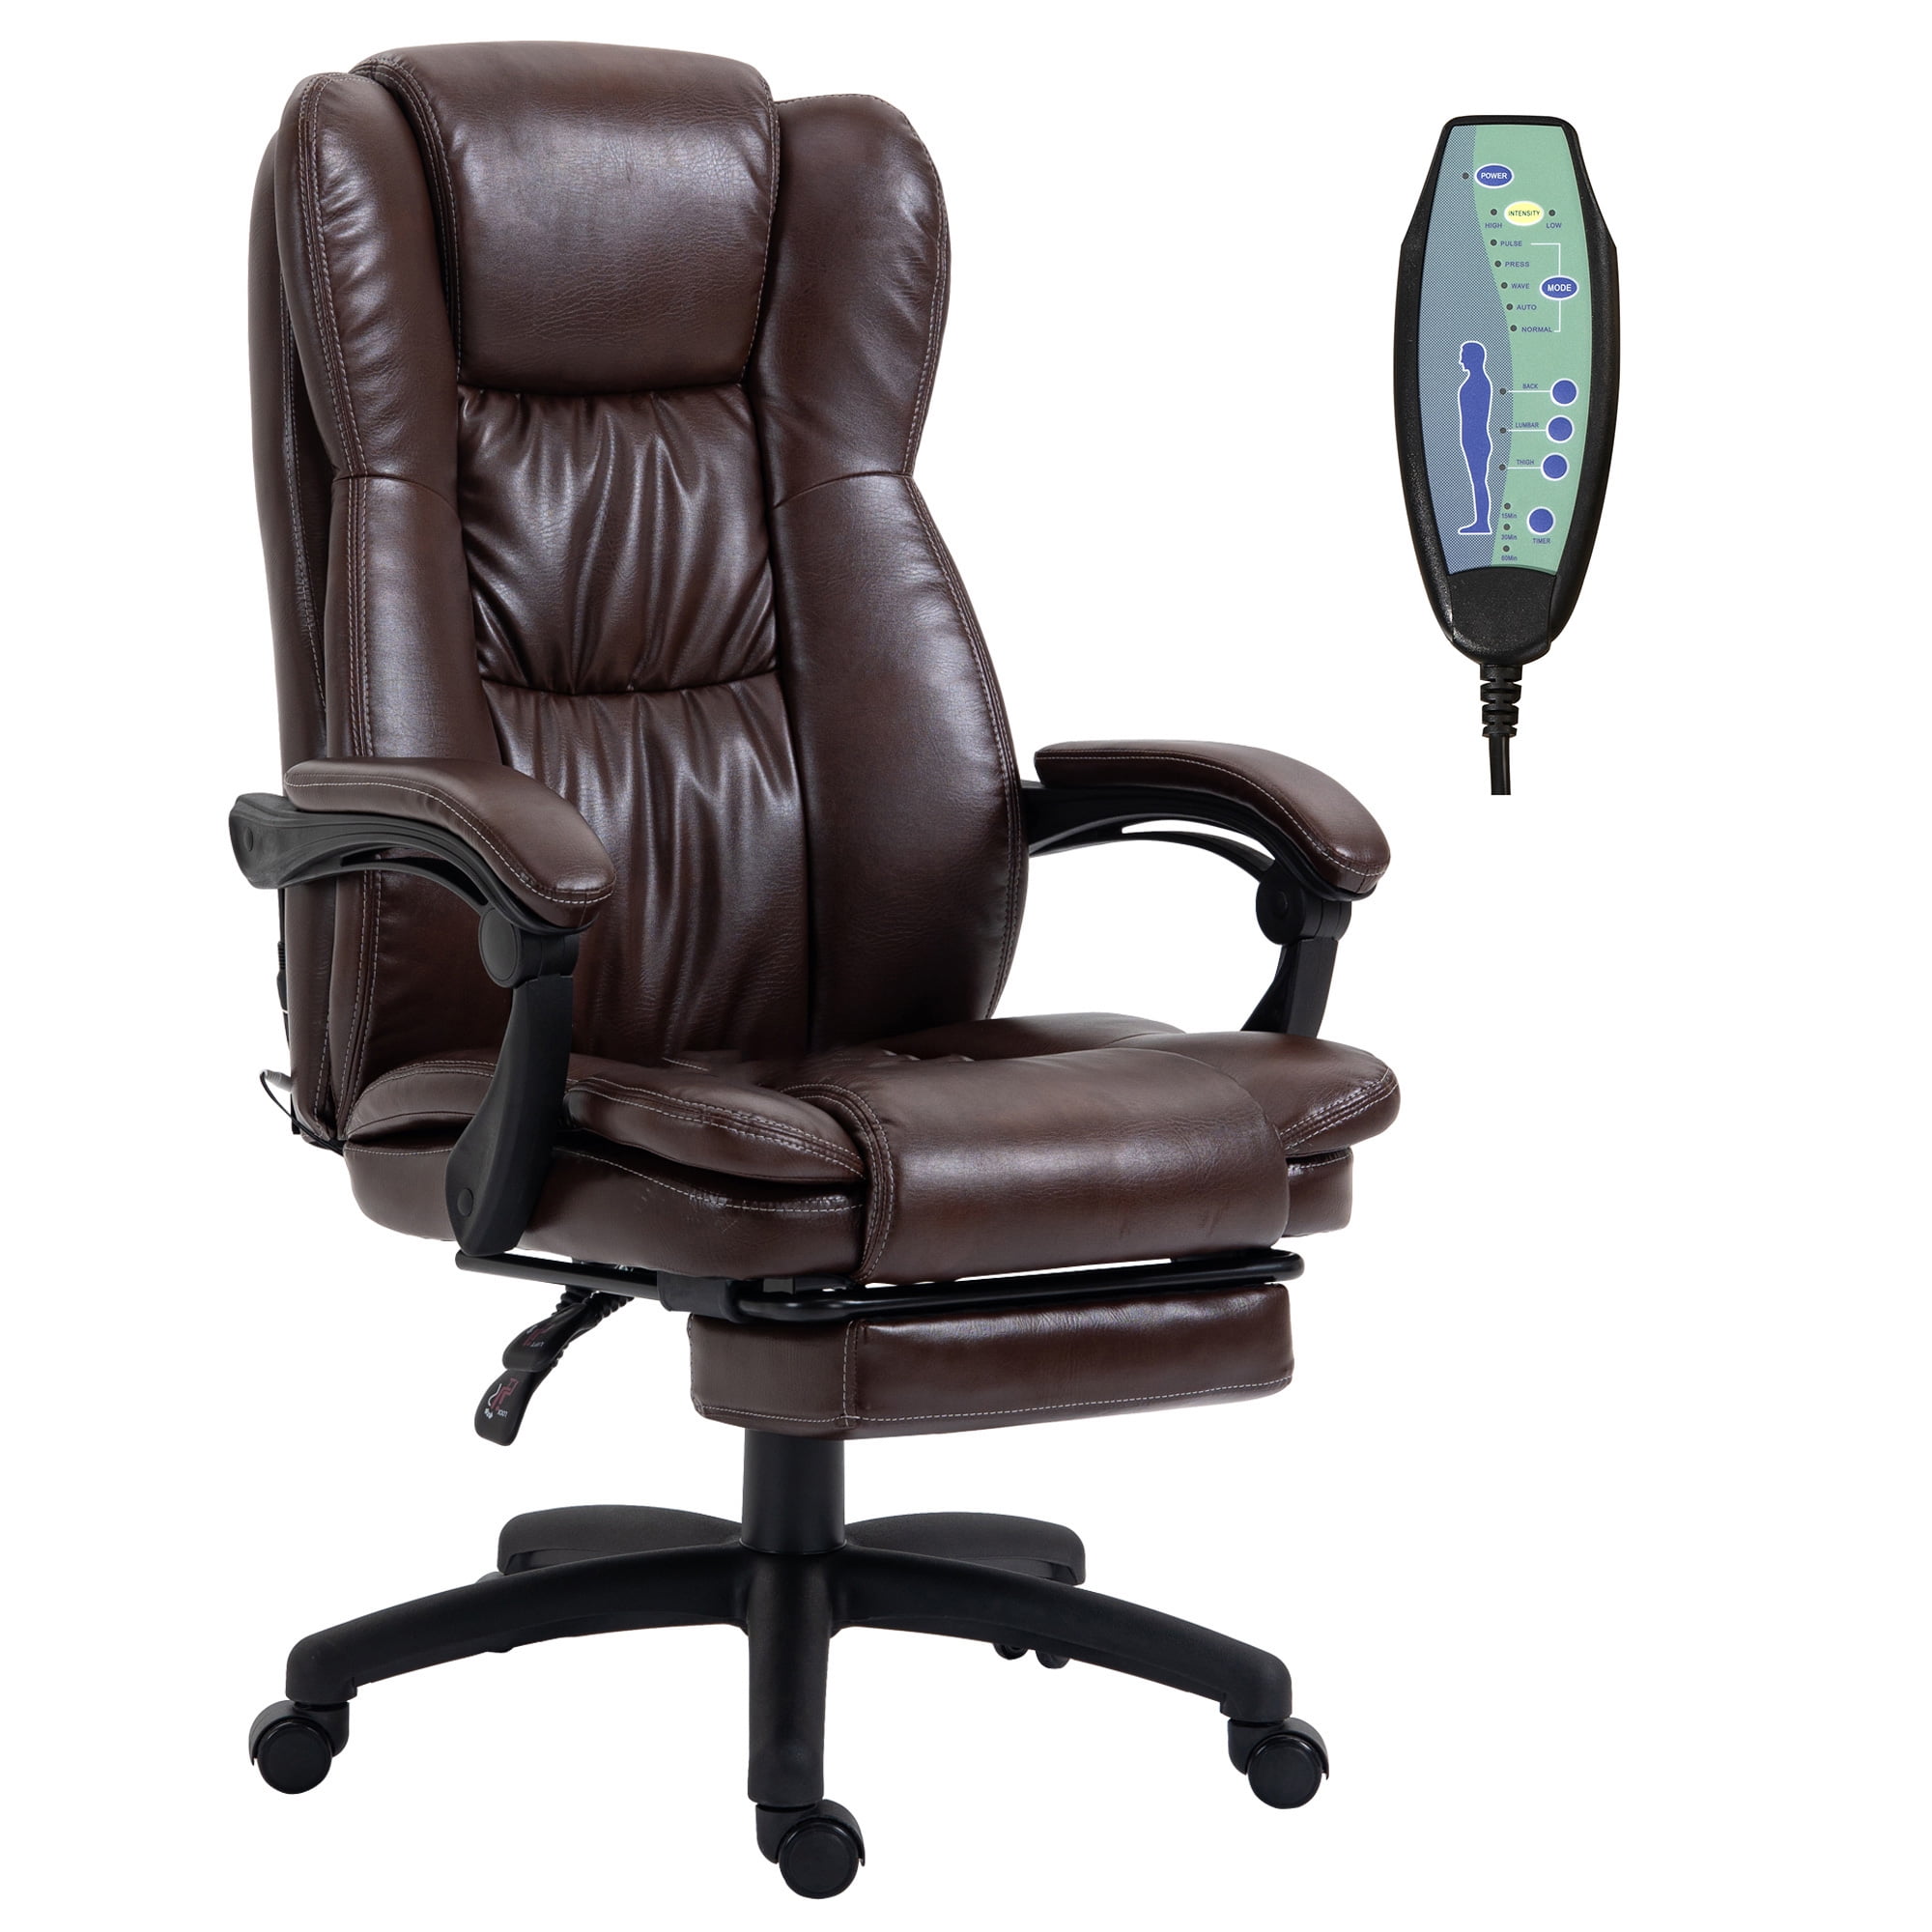 Vinsetto Ergonomic Task Office Chair Height Adjustable 6-Point Vibrating Massage 